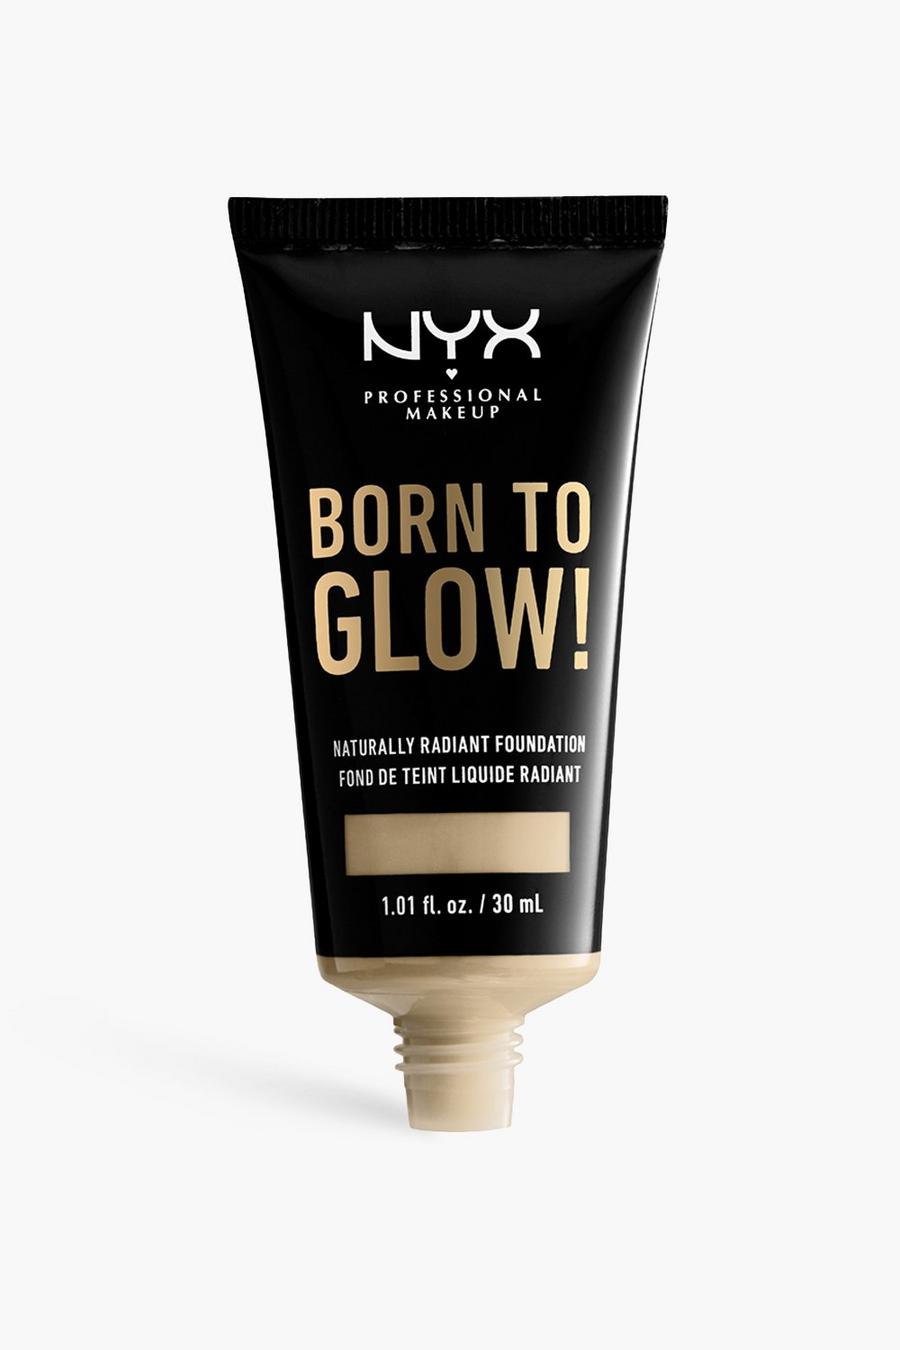 NYX Professional Makeup - Fond de teint radiance naturelle - Born To Glow!, 03 warm vanilla